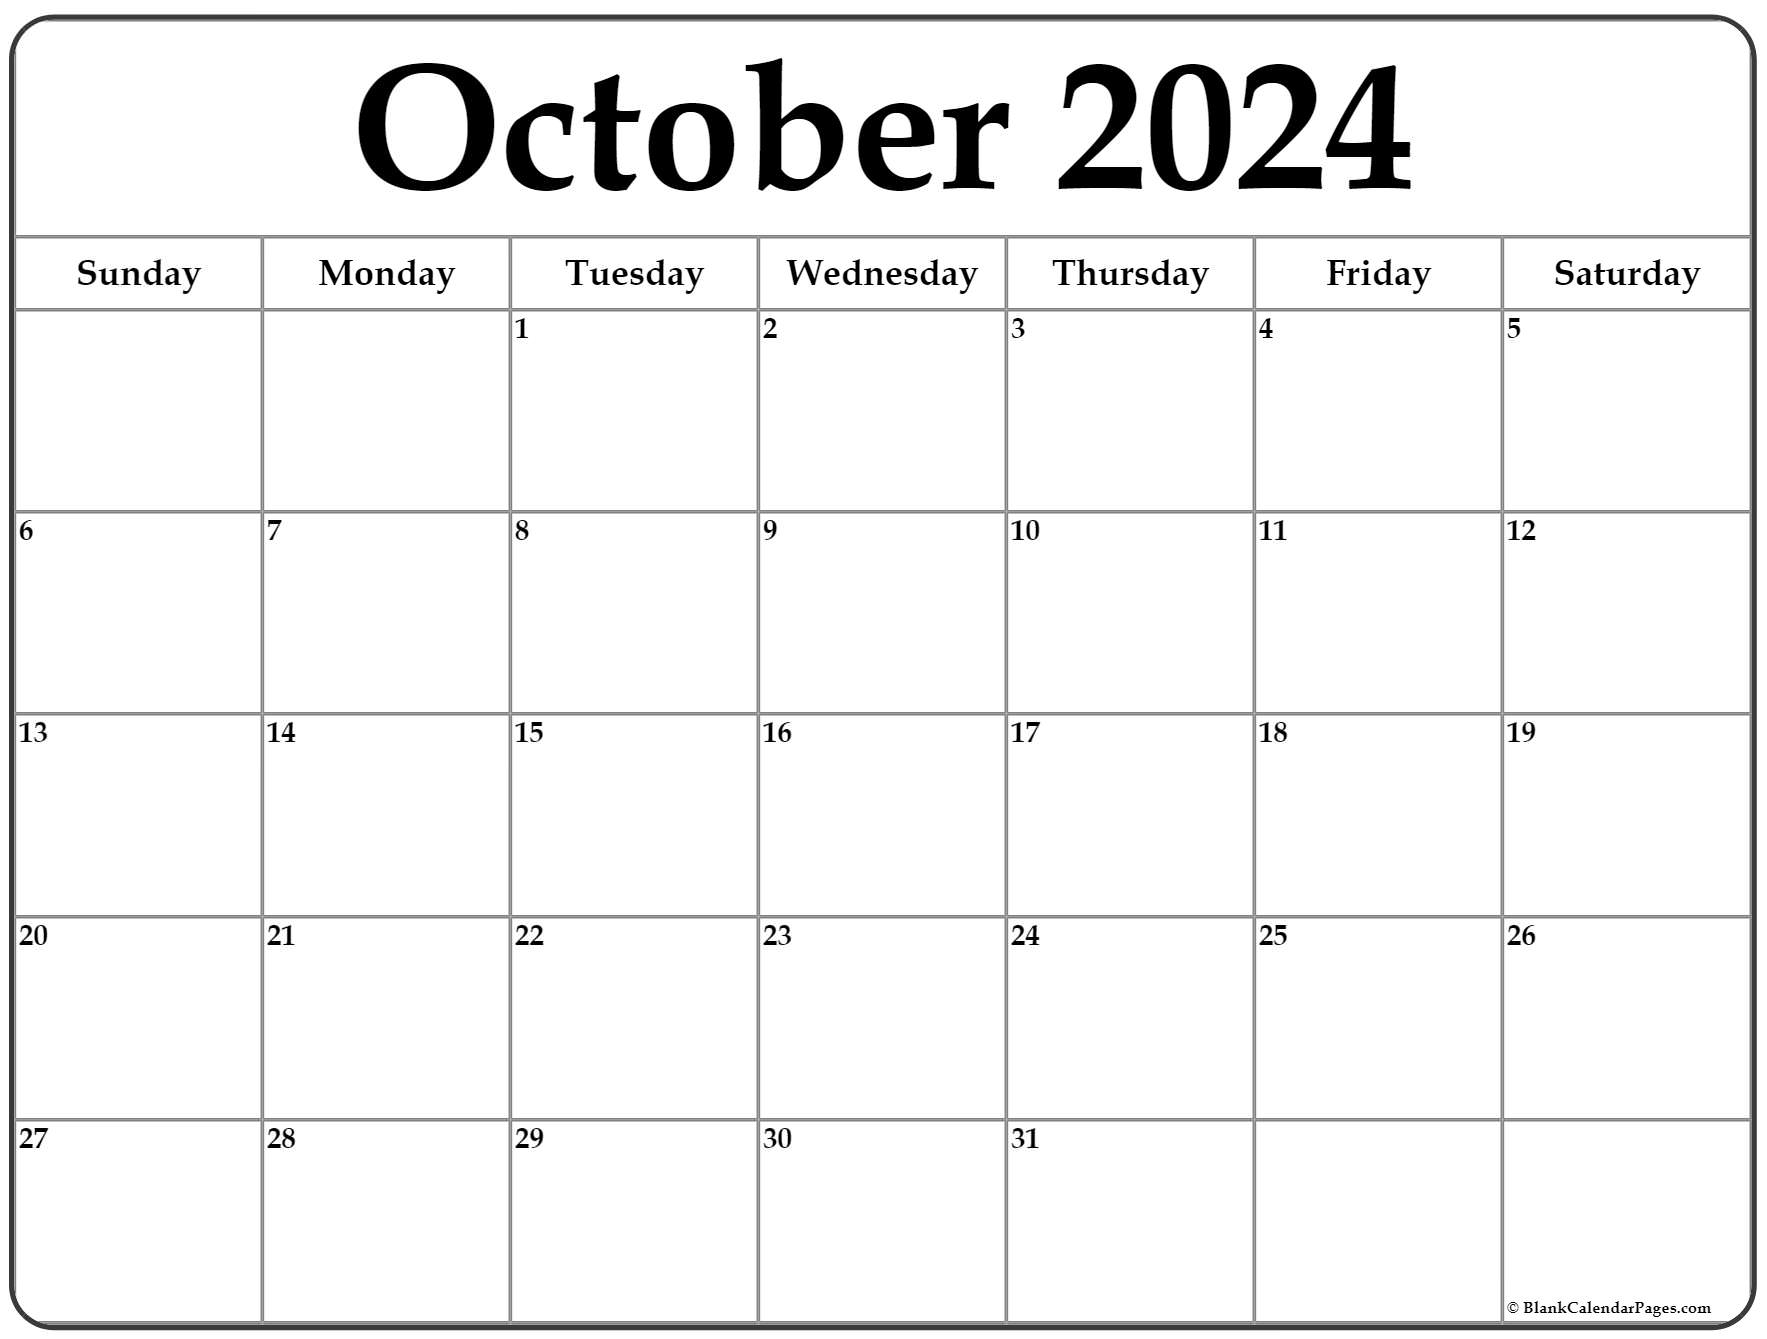 Free Printable October 2022 Calendar October 2022 Calendar | Free Printable Calendar Templates